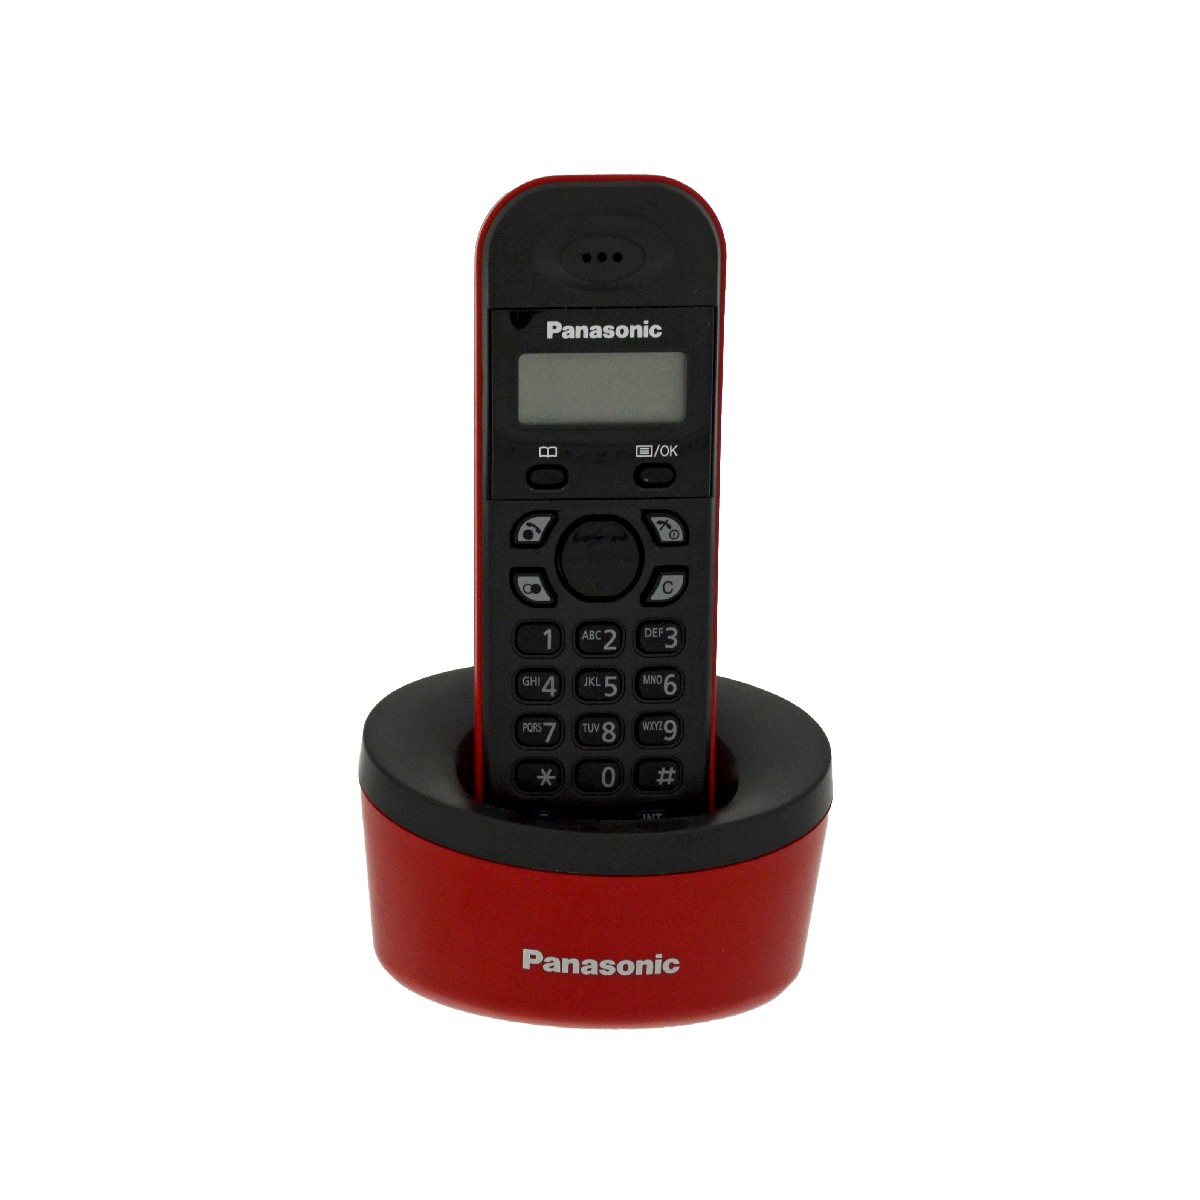 Refurbished (Εκθεσιακό) Ασύρματο Ψηφιακό Τηλέφωνο Panasonic KX-TG1311GRR Κόκκινο με 9 Πλήκτρα Ταχείας Κλήσης